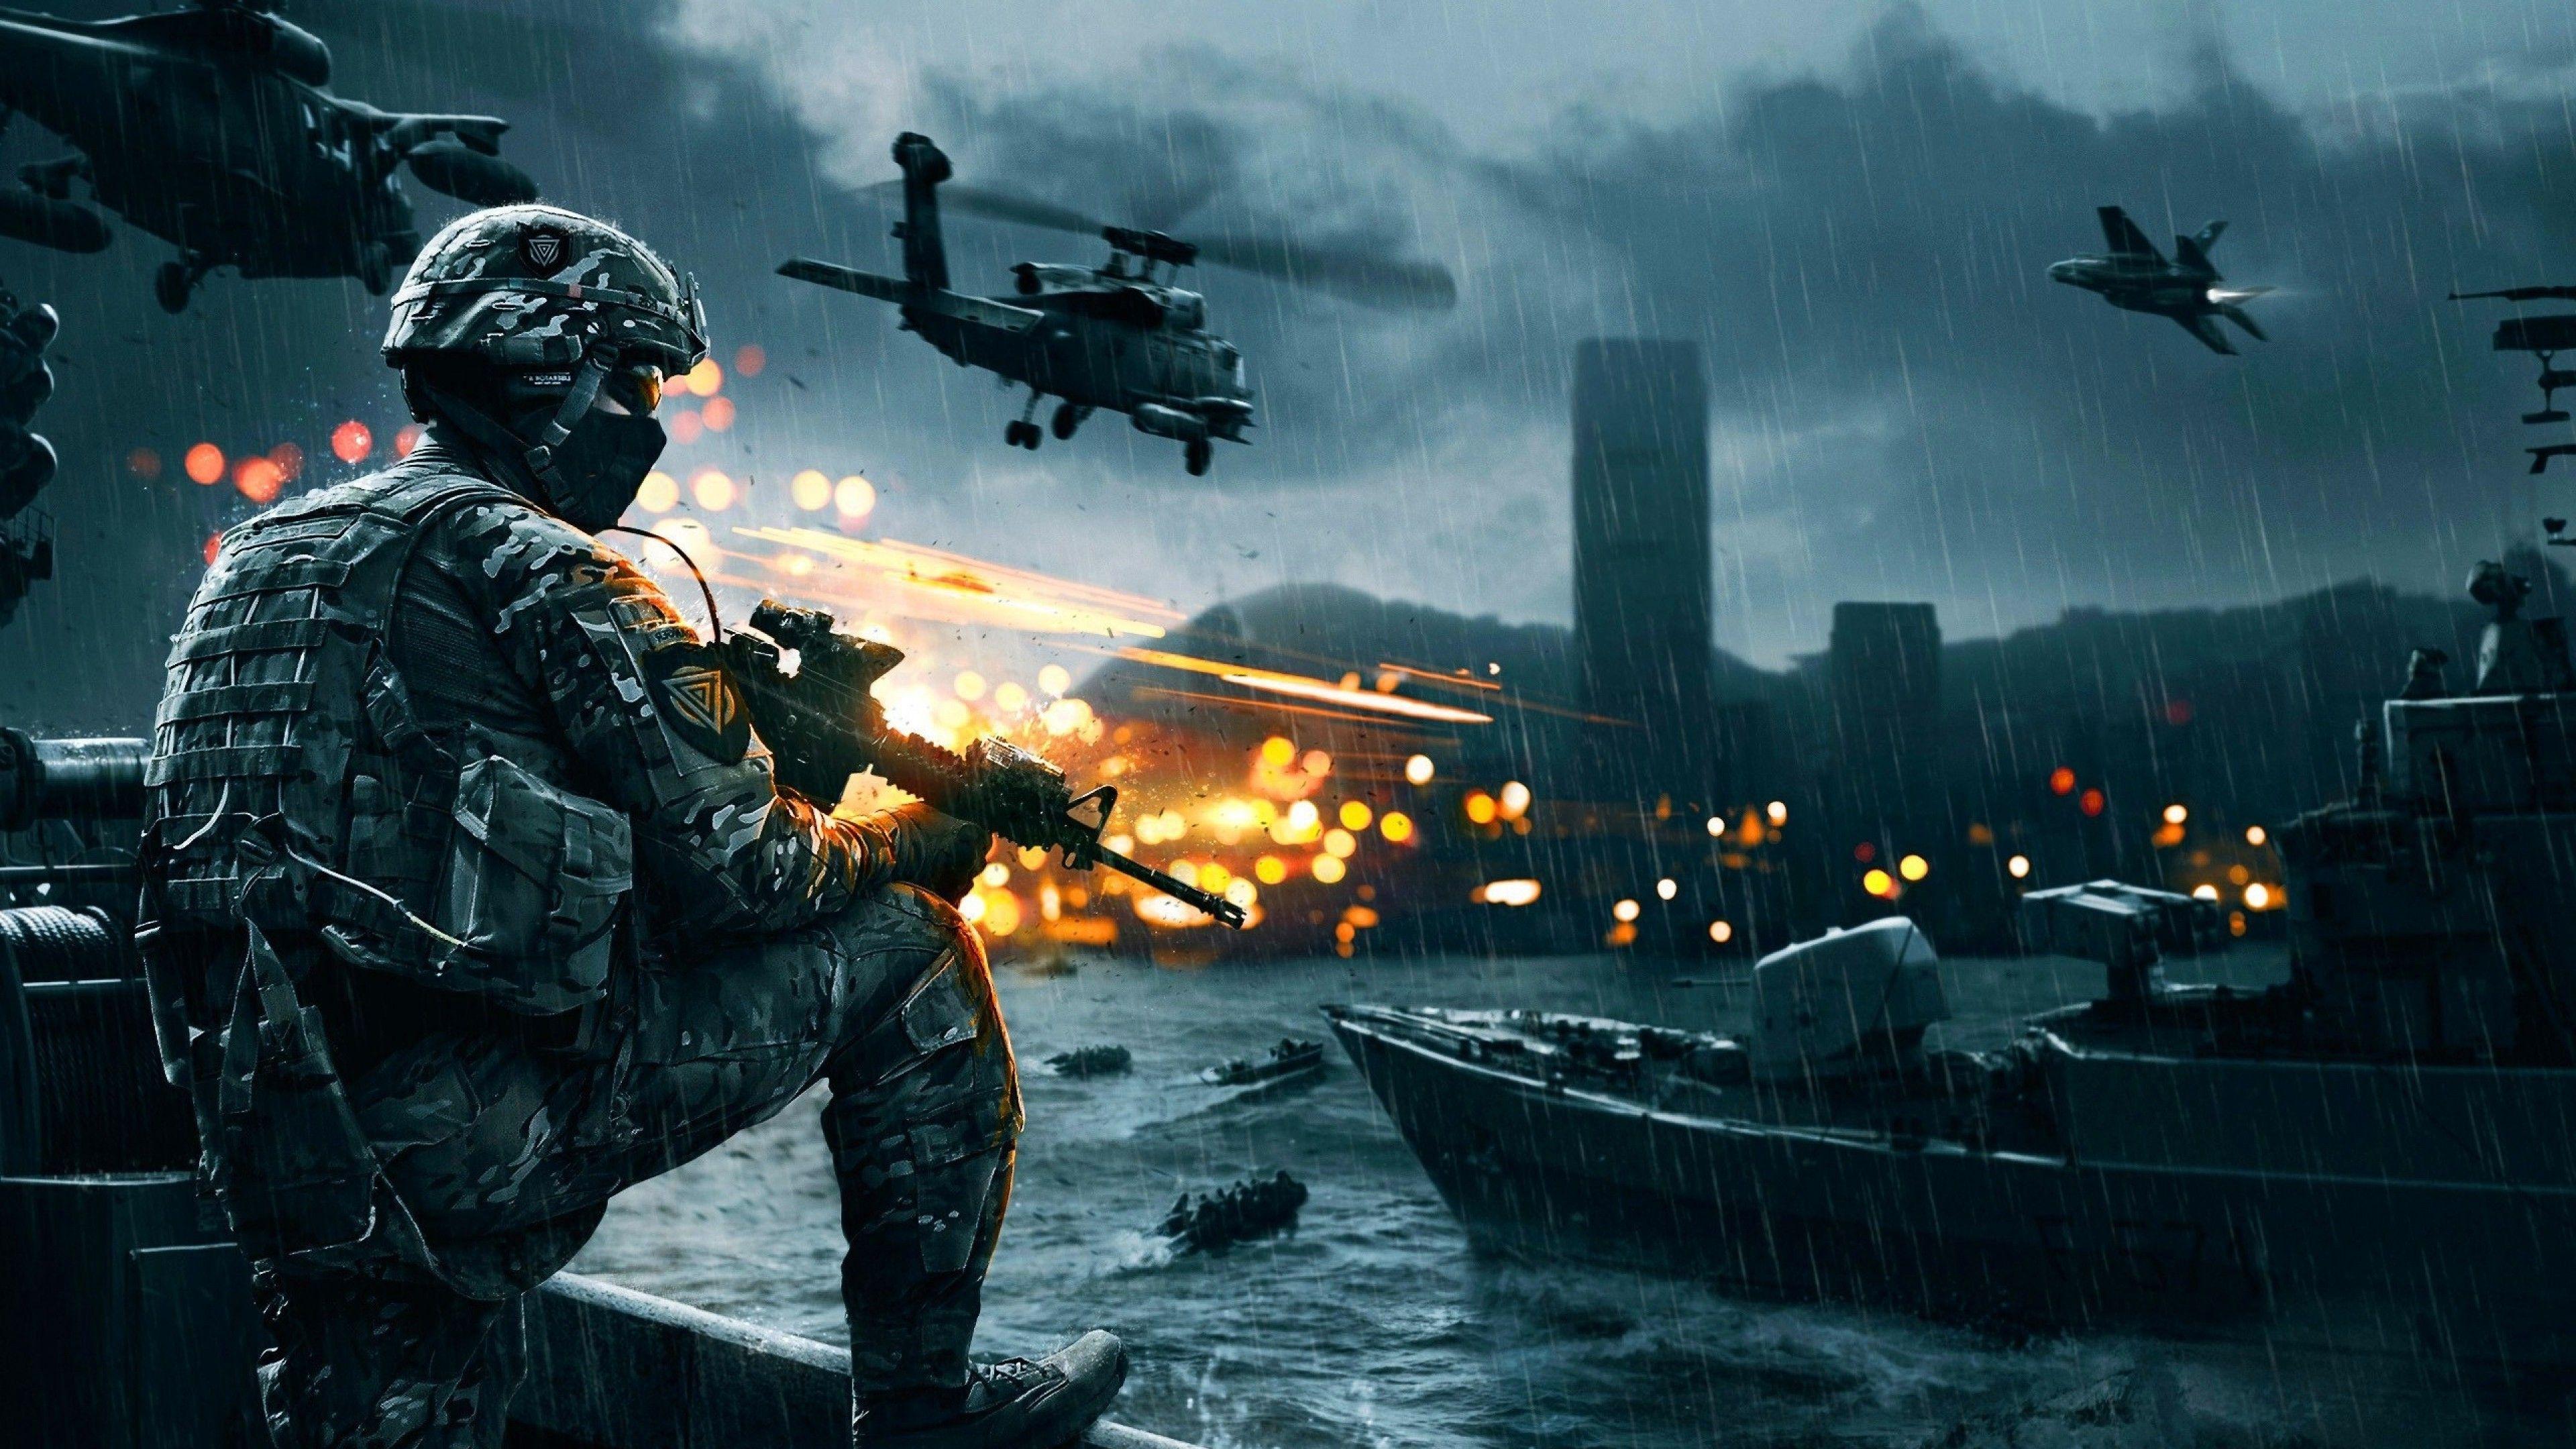 Battlefield HD Games, 4k Wallpaper, Image, Background, Photo